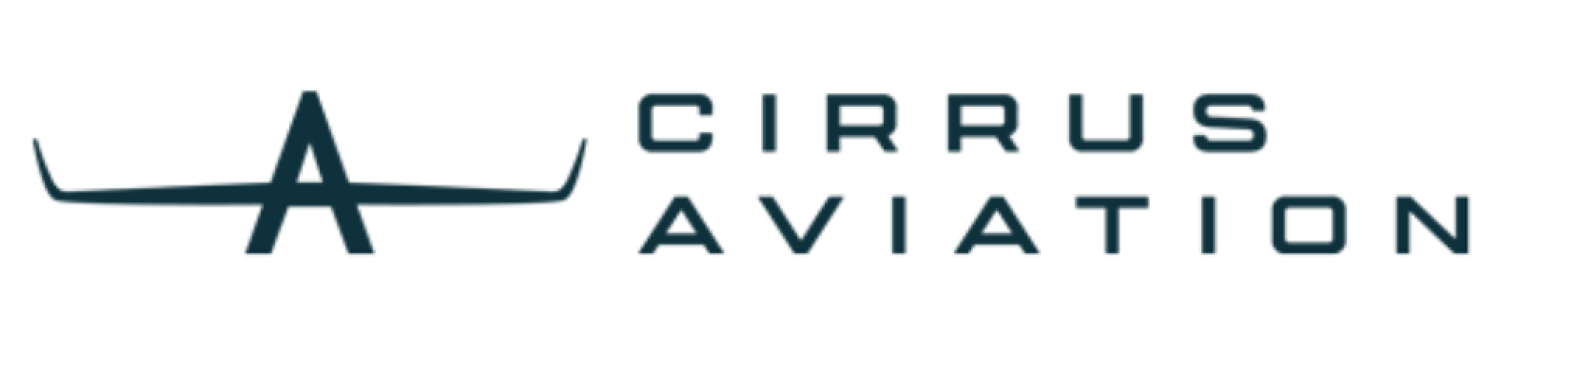 Cirrus Aviation